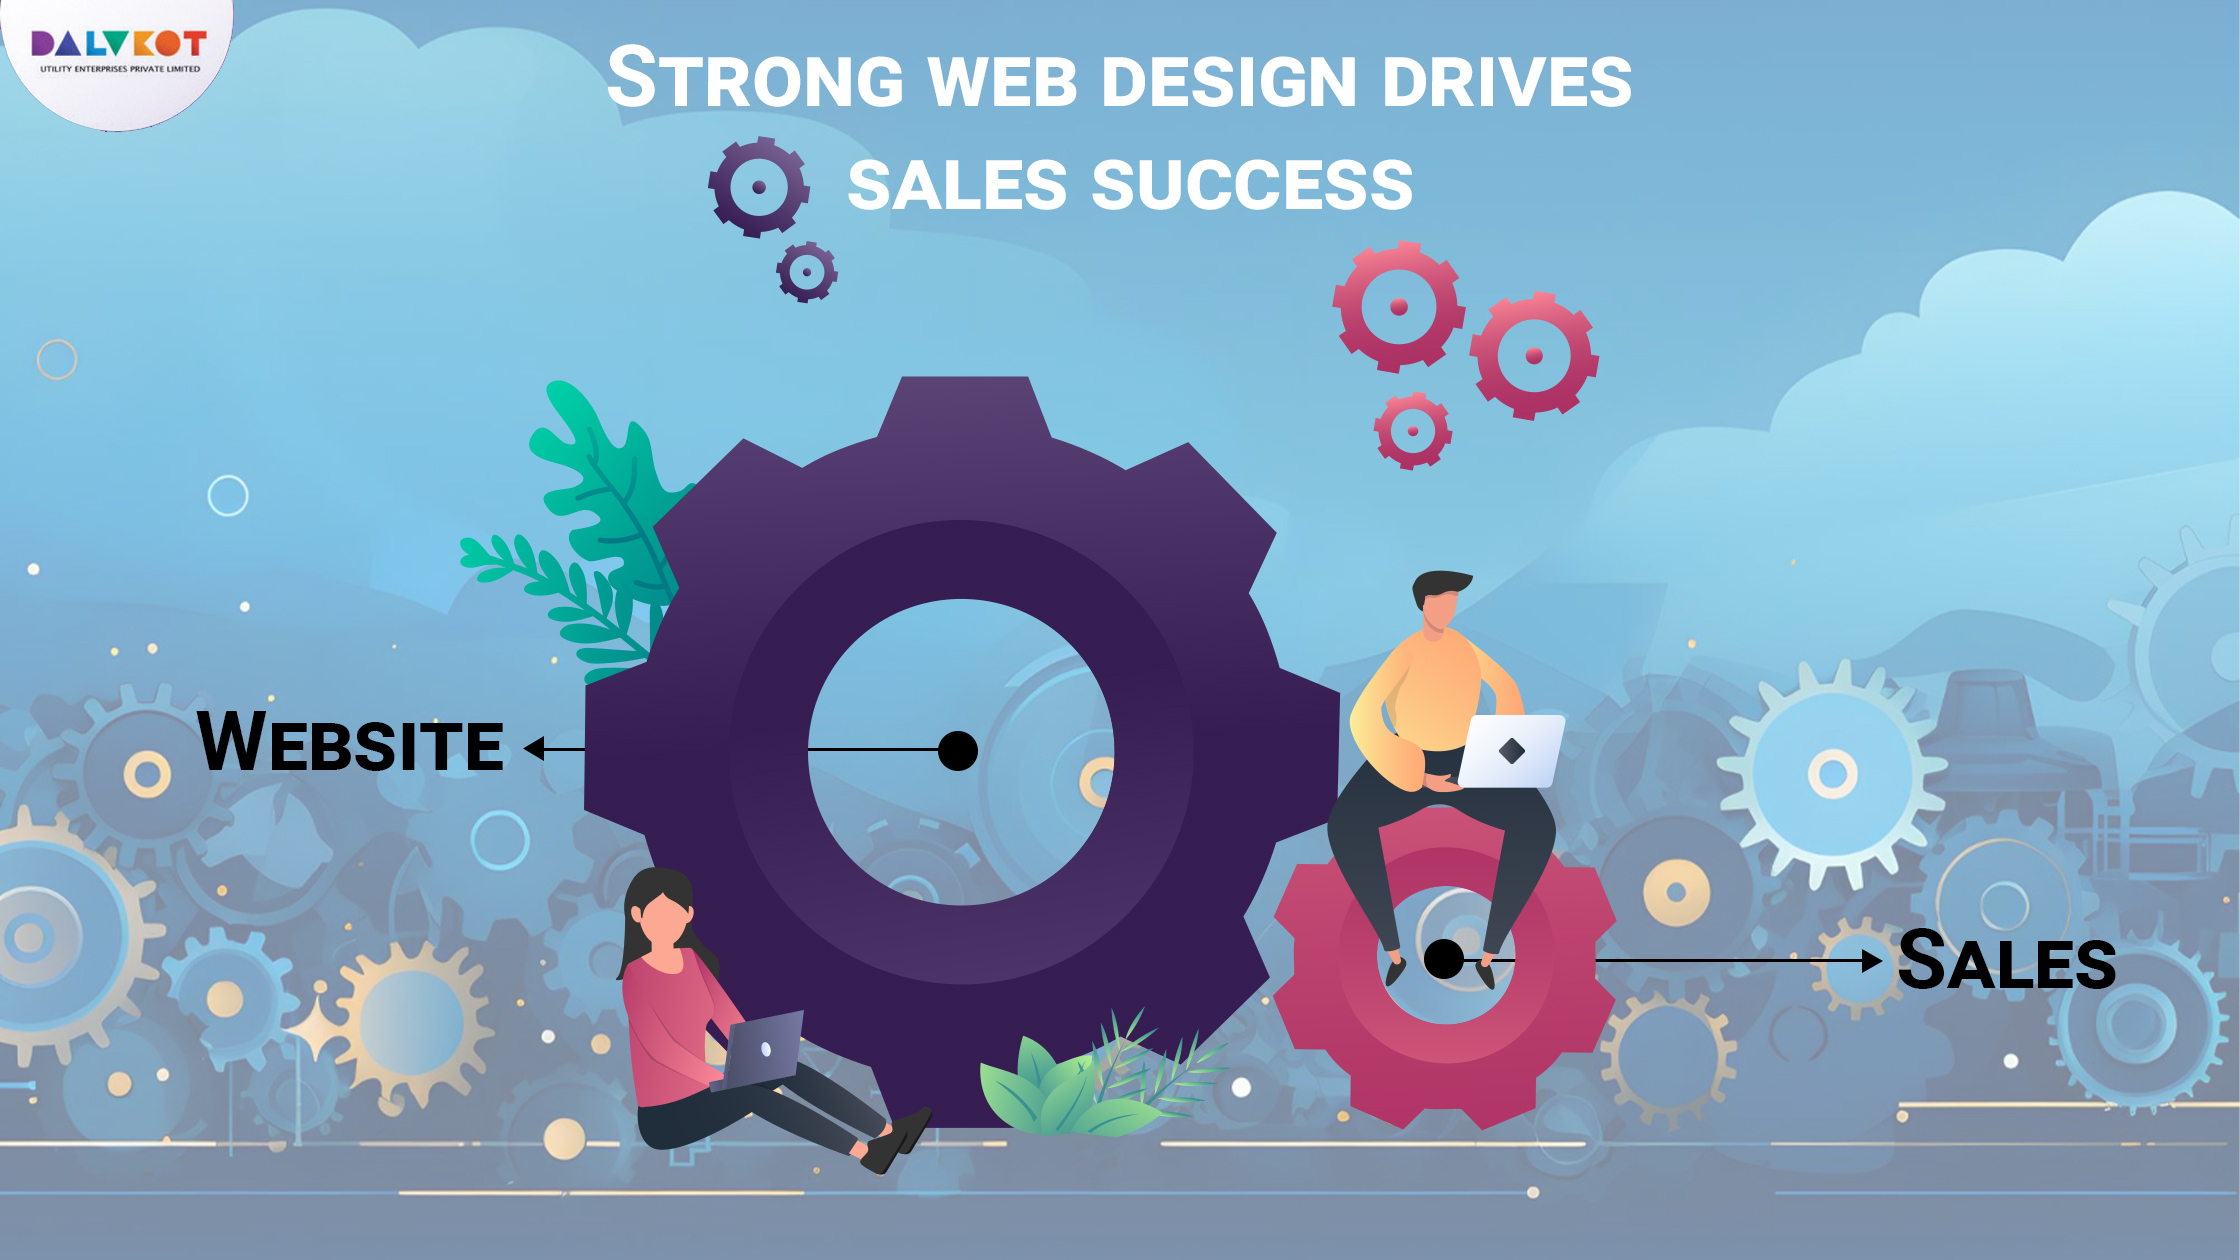 5 Ways Your Web Design Can Improve Sales